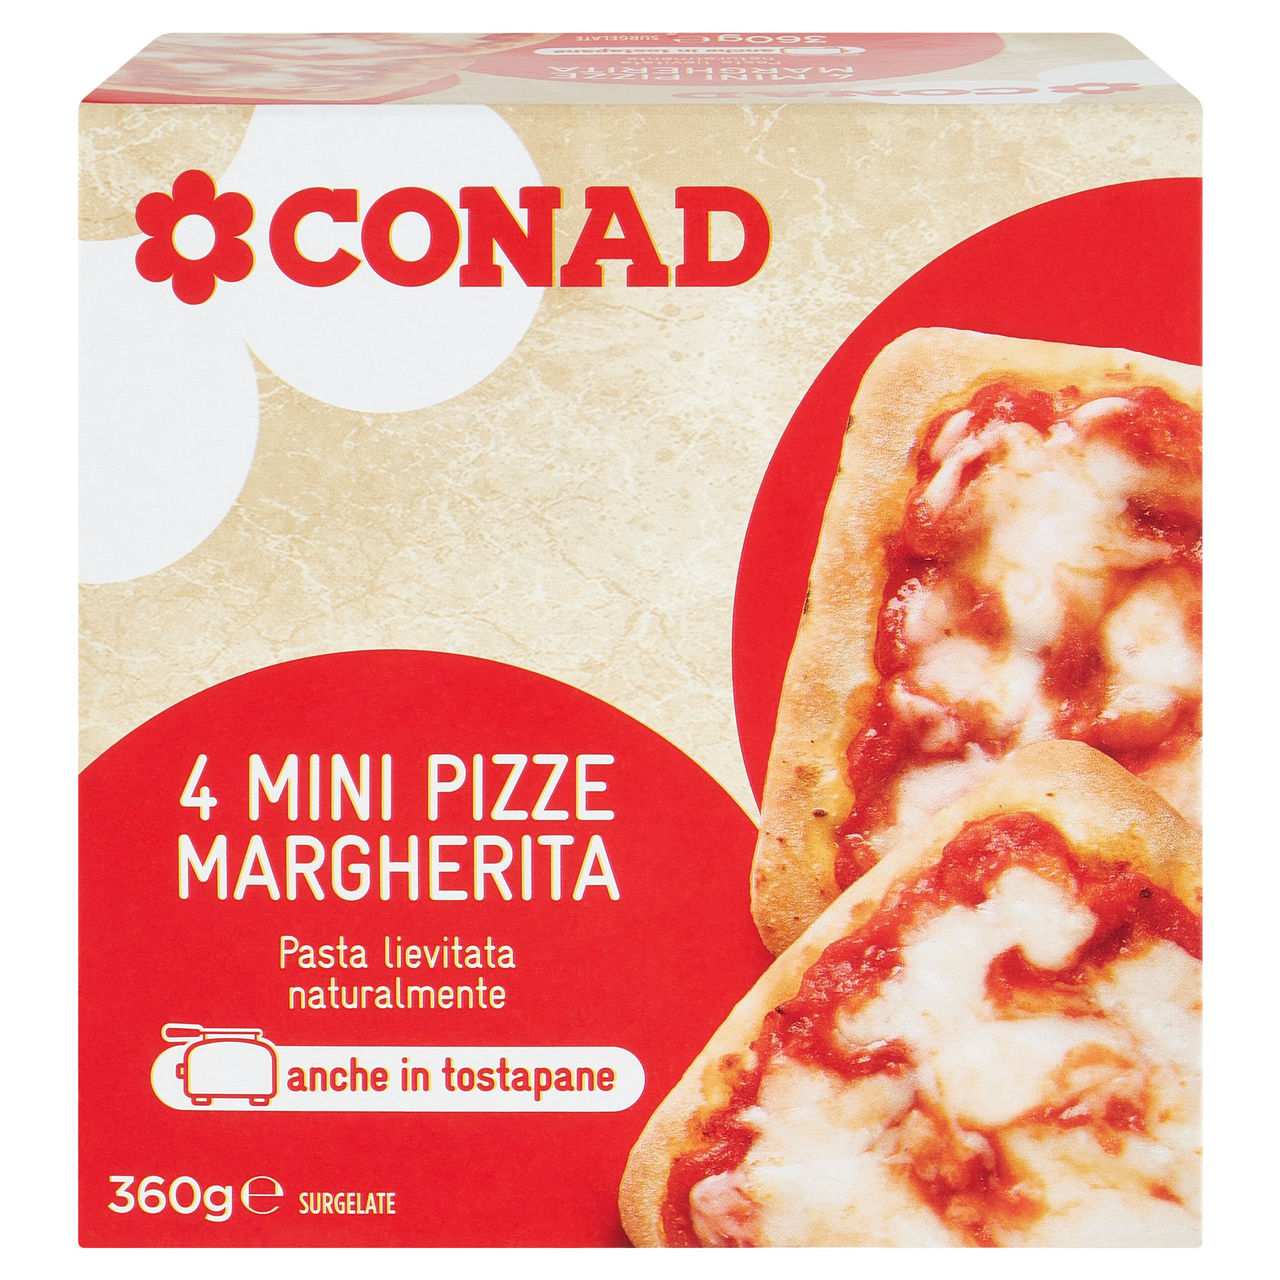 4 Mini Pizze Margherita Conad in vendita online